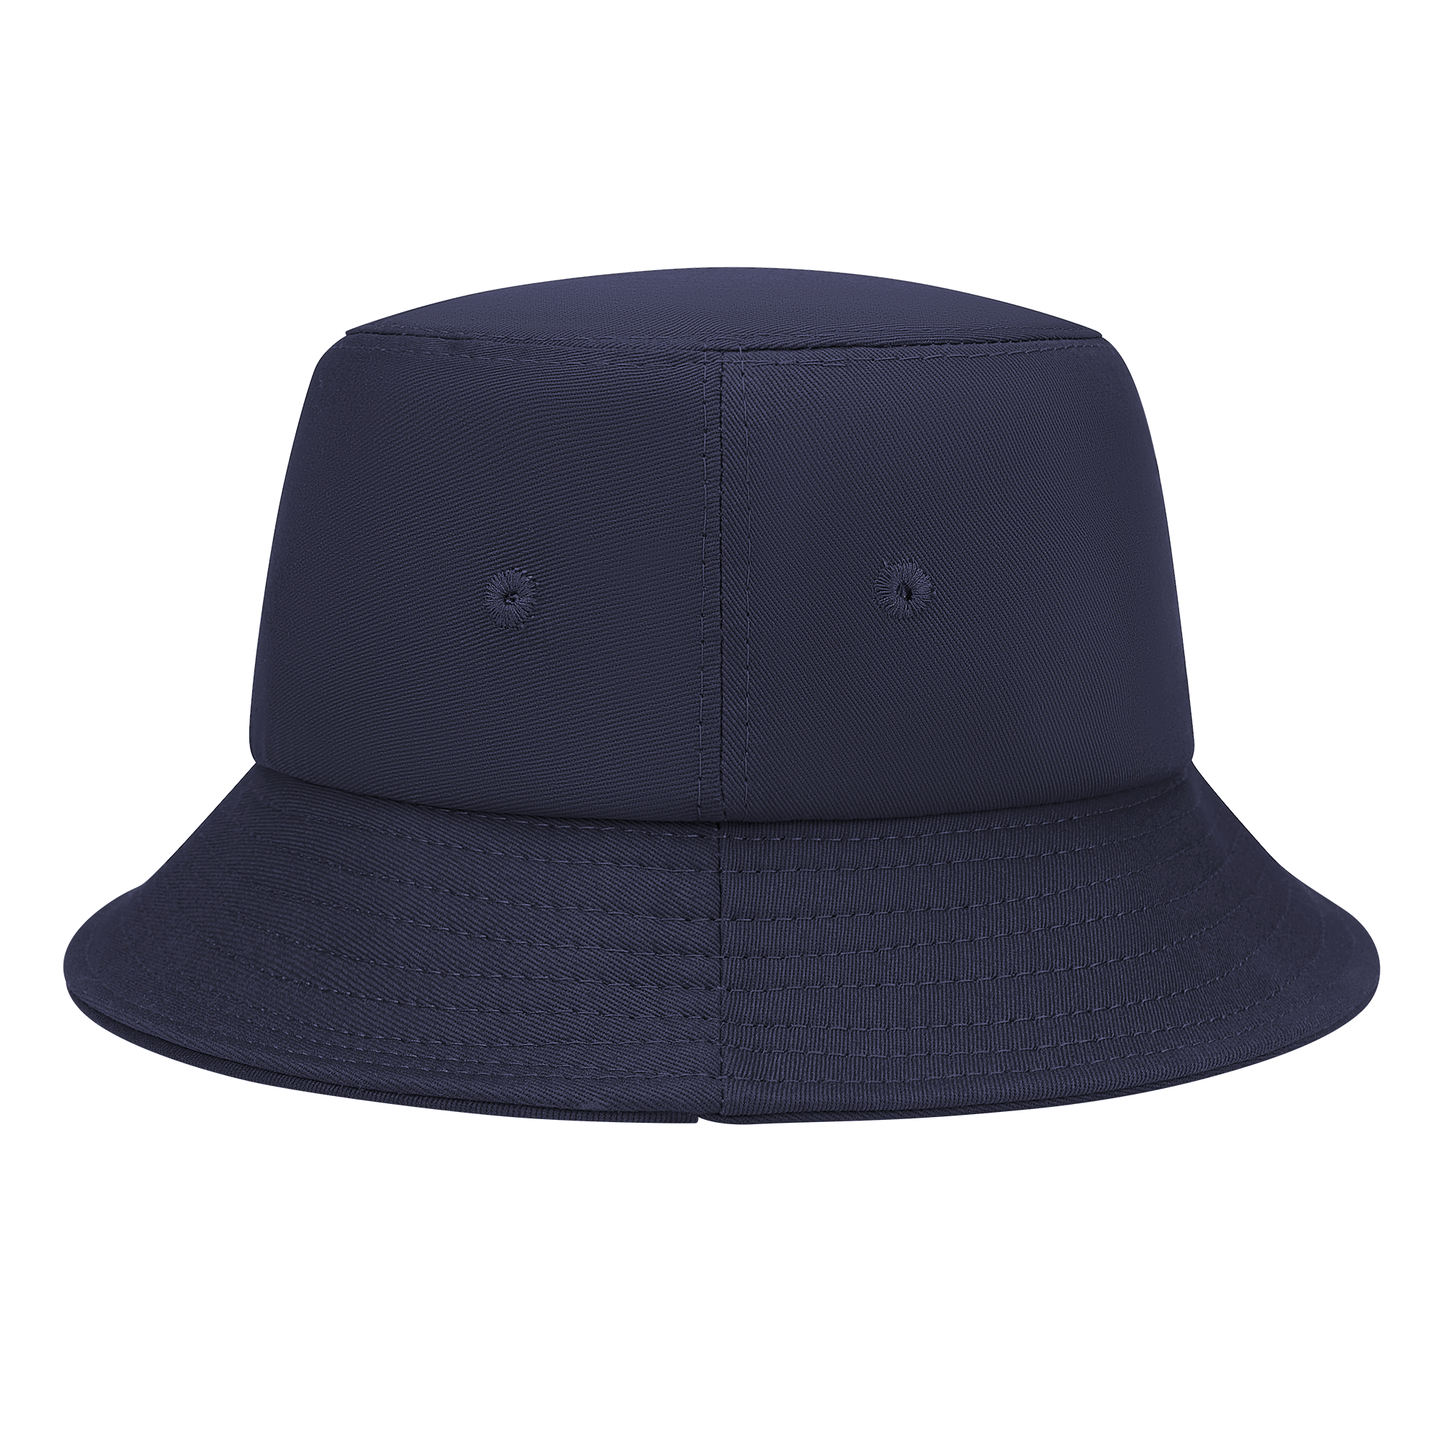 FZ Unisex Embroidered Bucket Hats